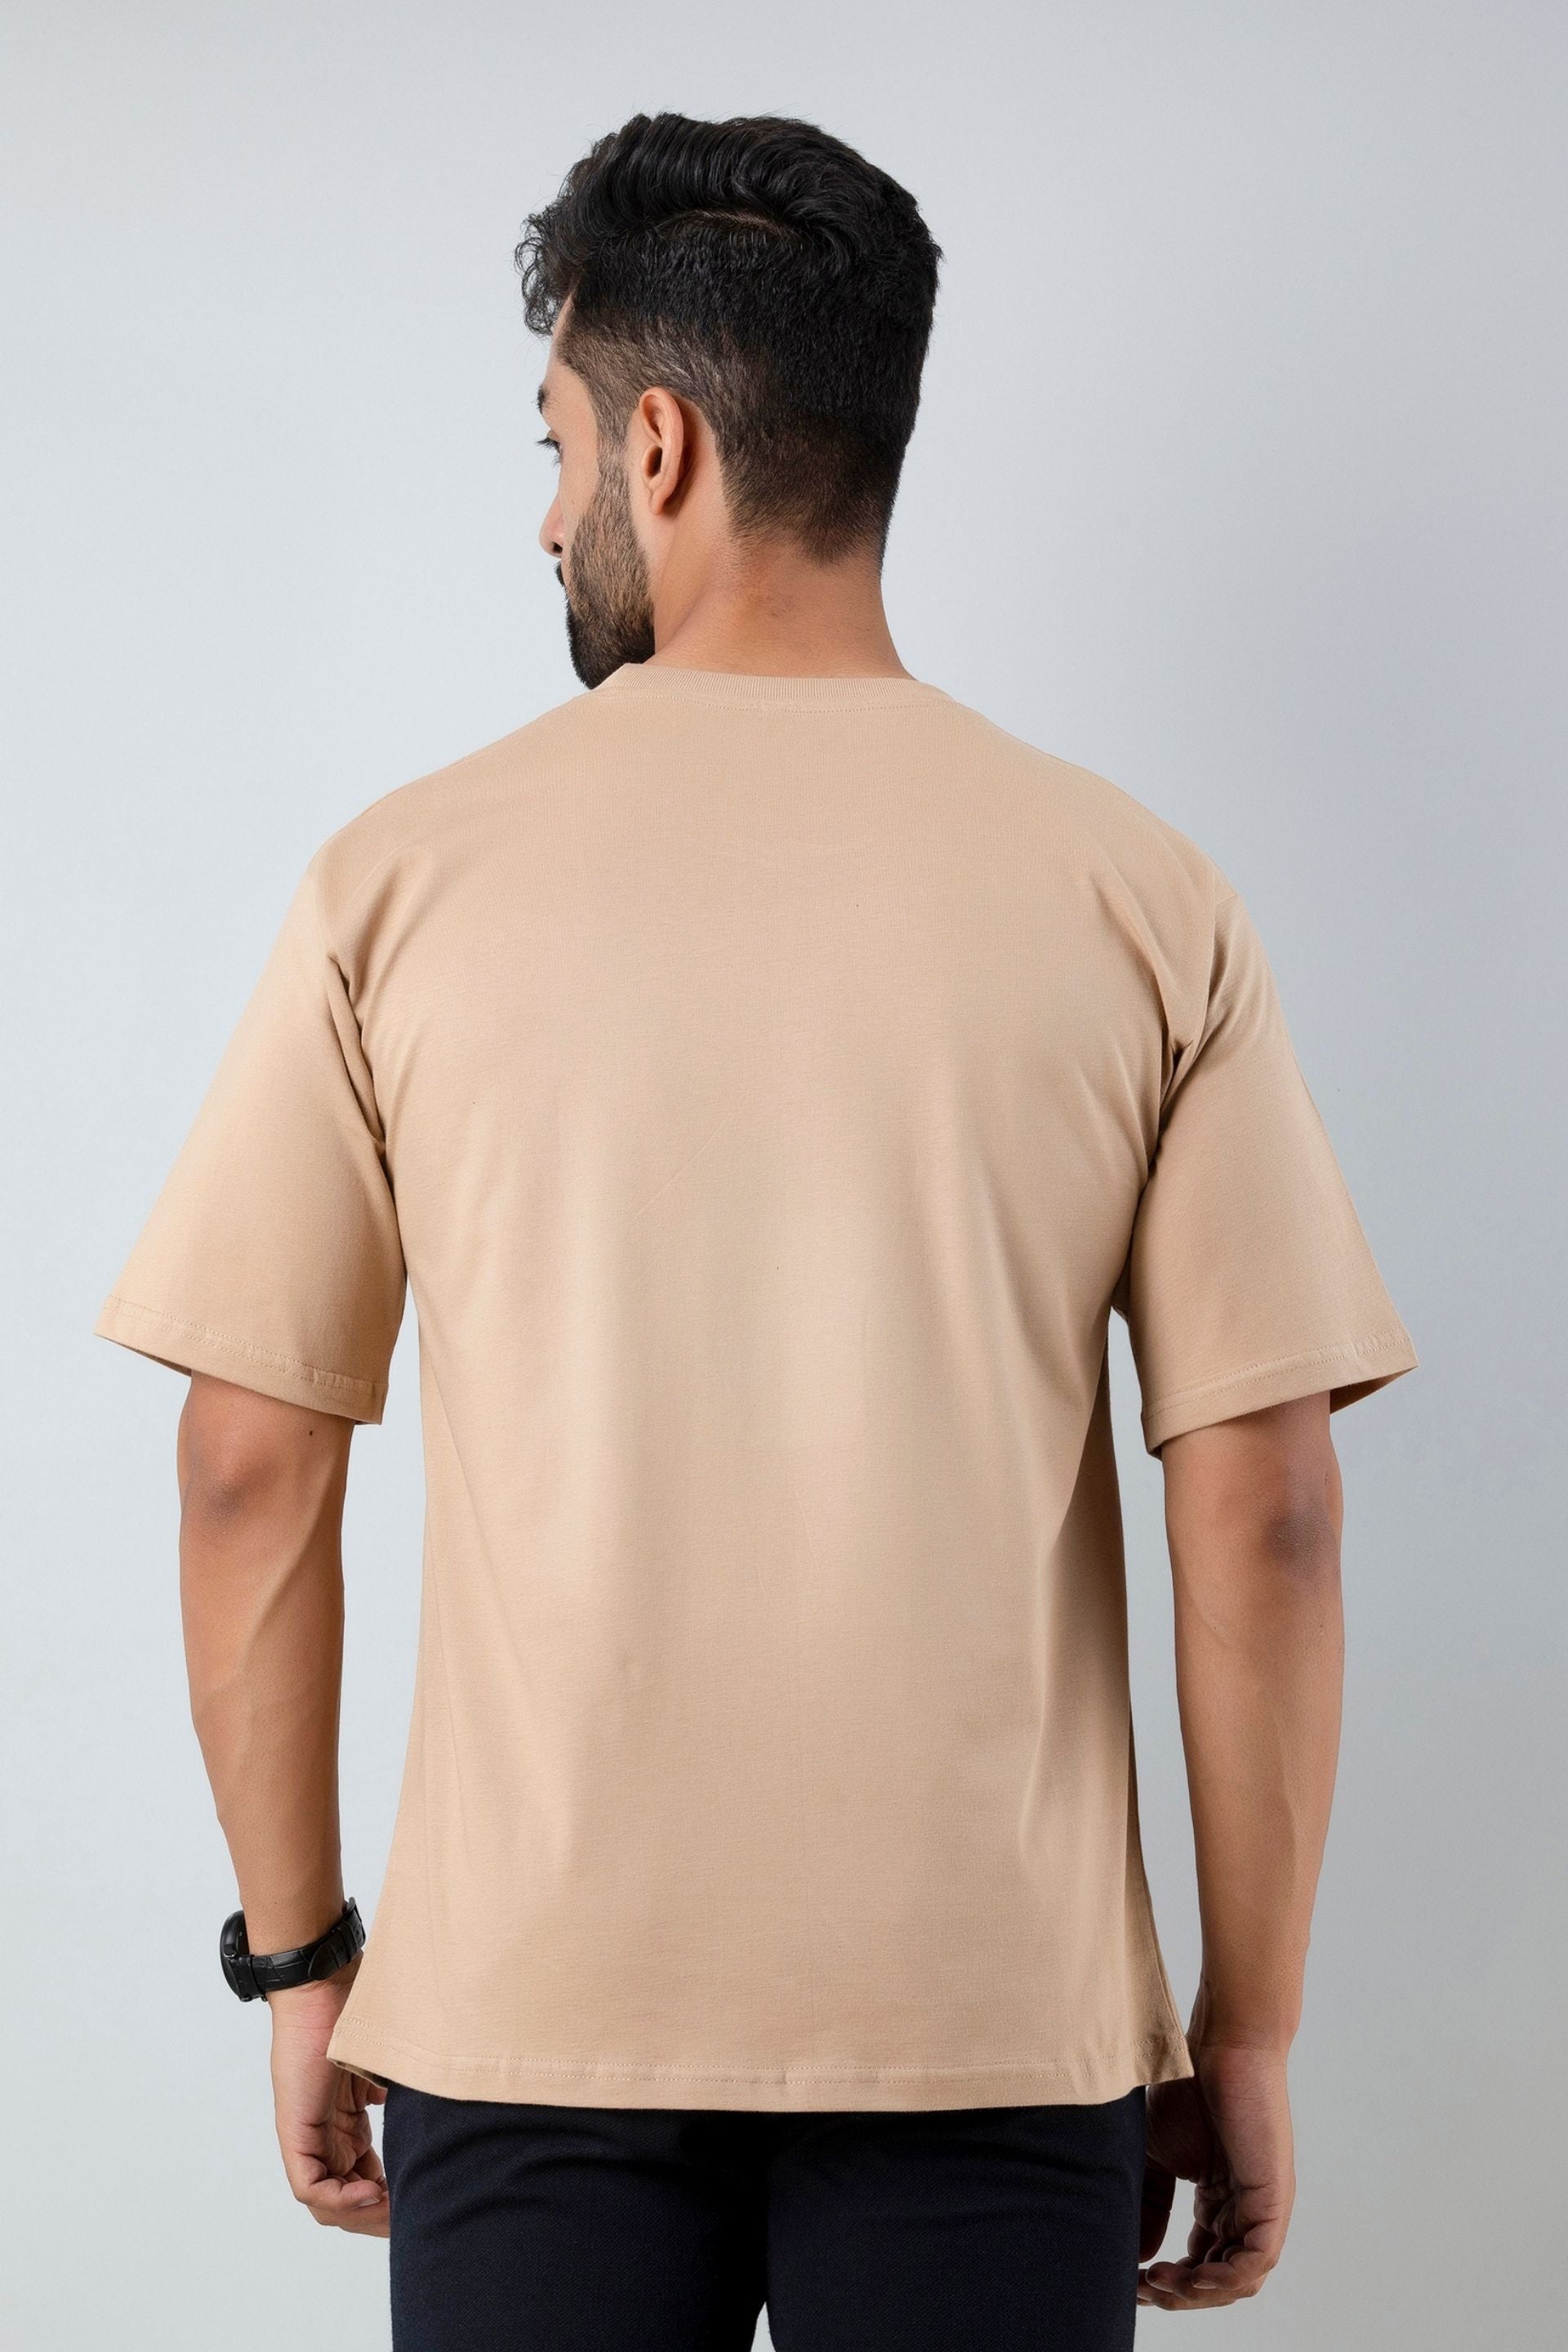 Firangi Yarn Oversize Tshirt in Coffee Brown/Taupe With Coffee Love Print (Baggy Tee)